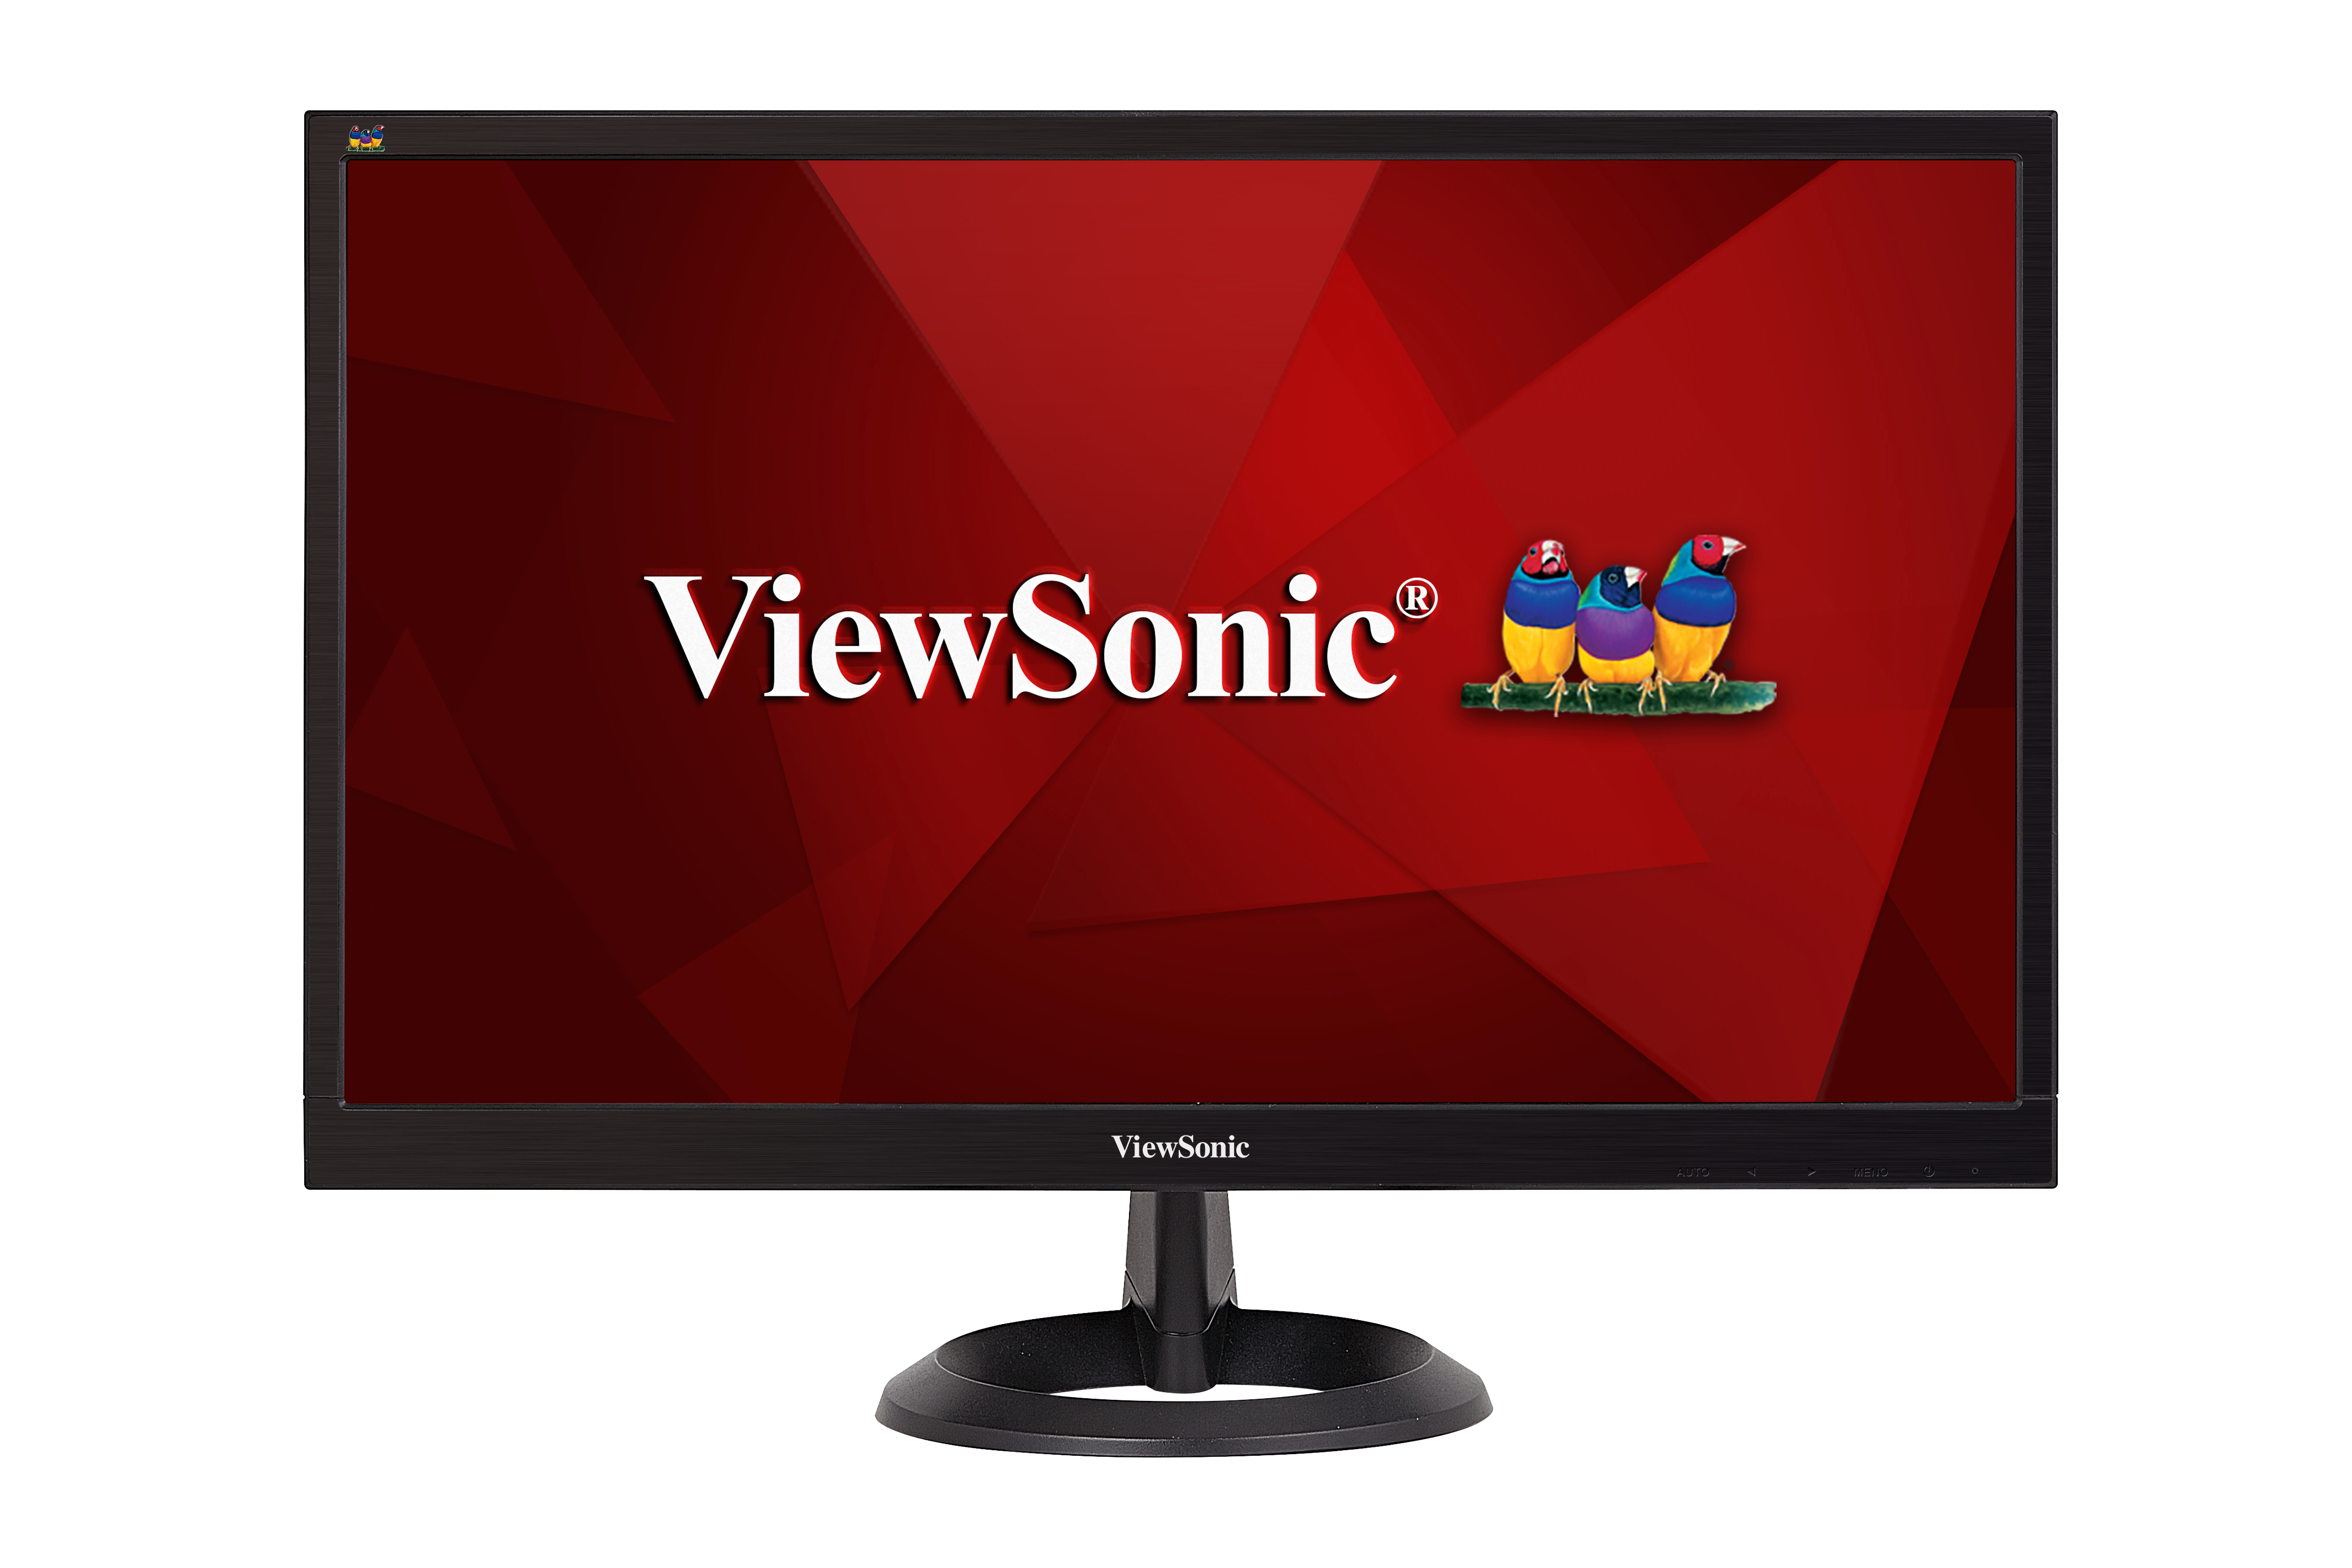 ViewSonic VA2261H-2 22” (21.5” viewable) 1080P Monitor with HDMI 